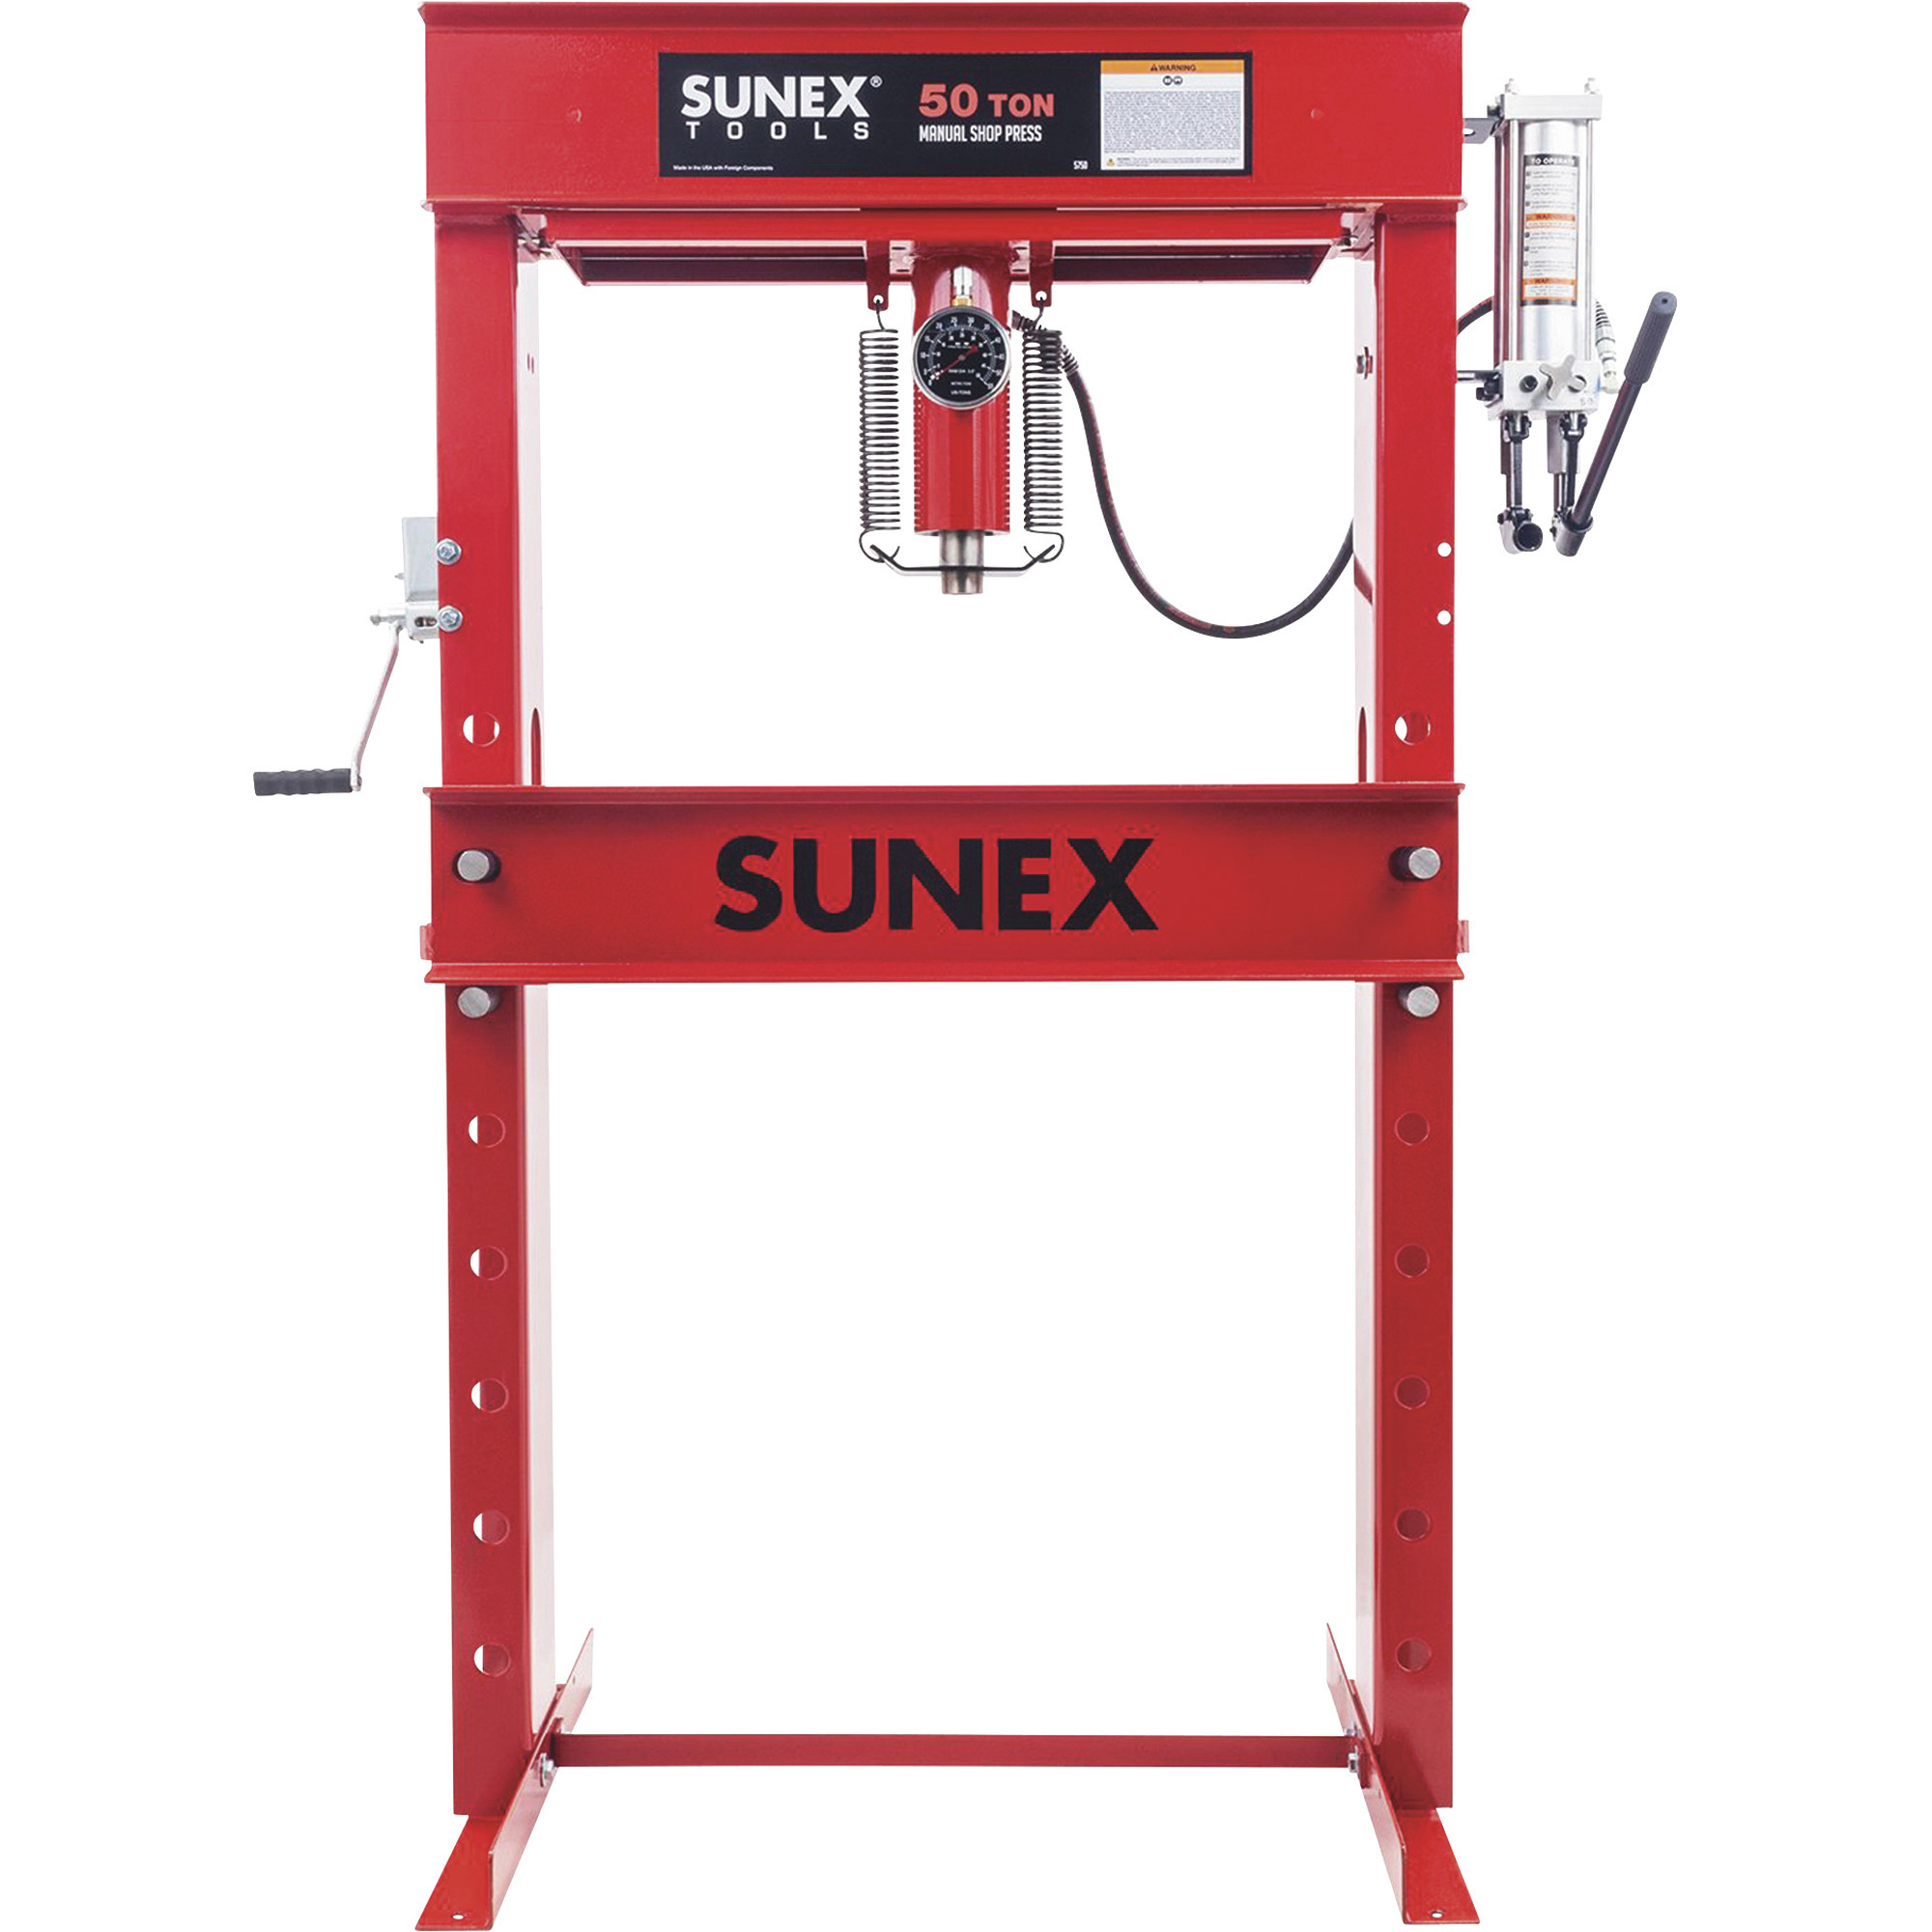 SUNEX 50-Ton Manual Hydraulic Shop Press, Model 5750